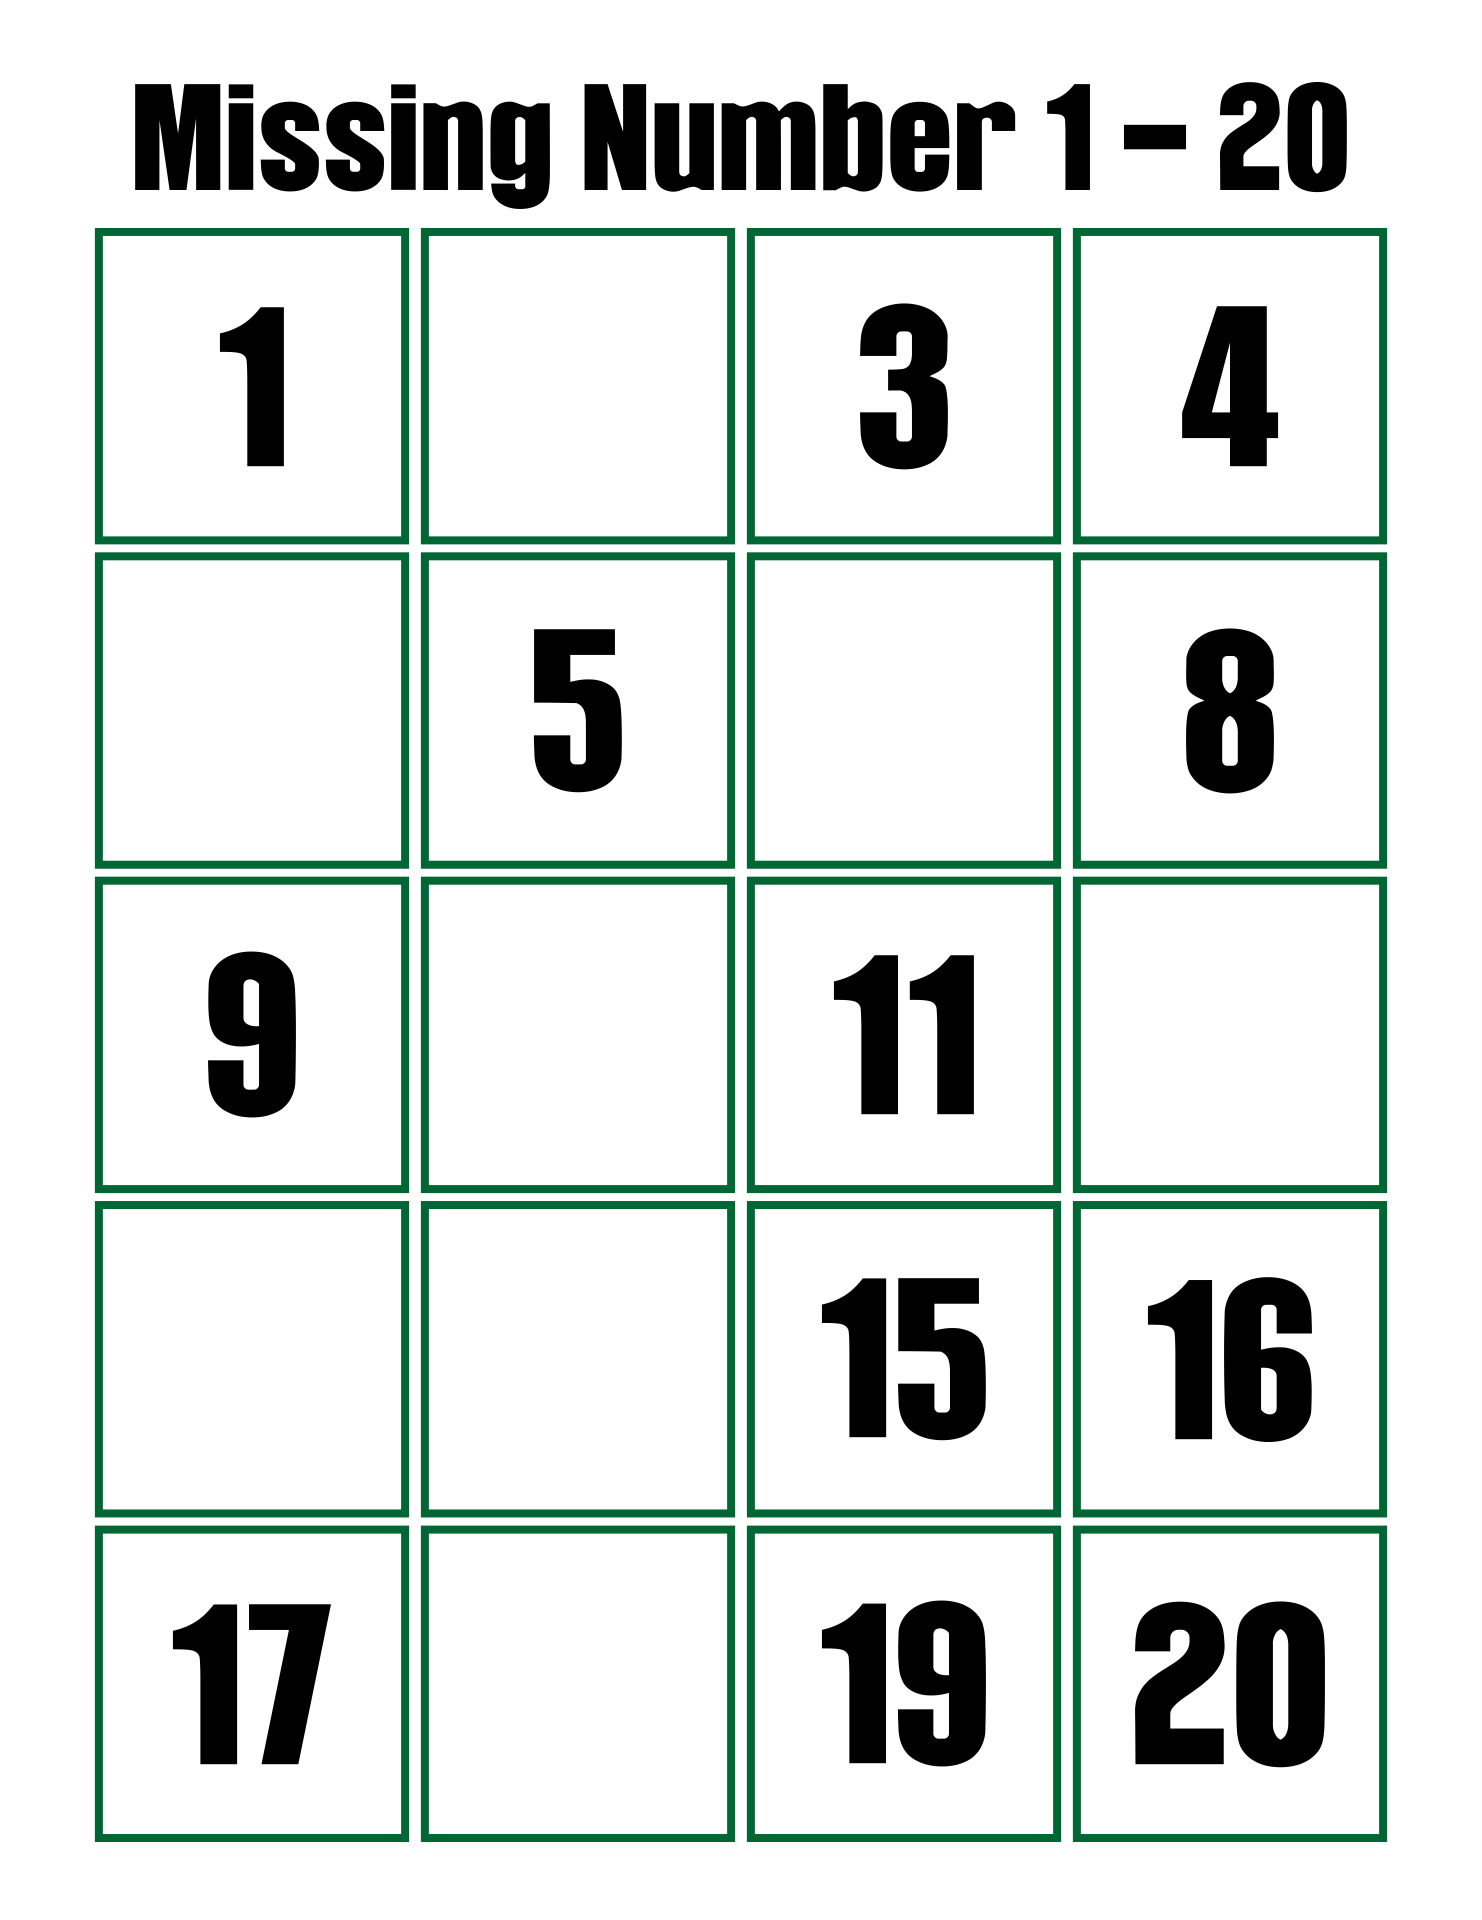 5-best-images-of-numbers-1-20-printable-worksheets-kindergarten-tracing-number-1-20-number